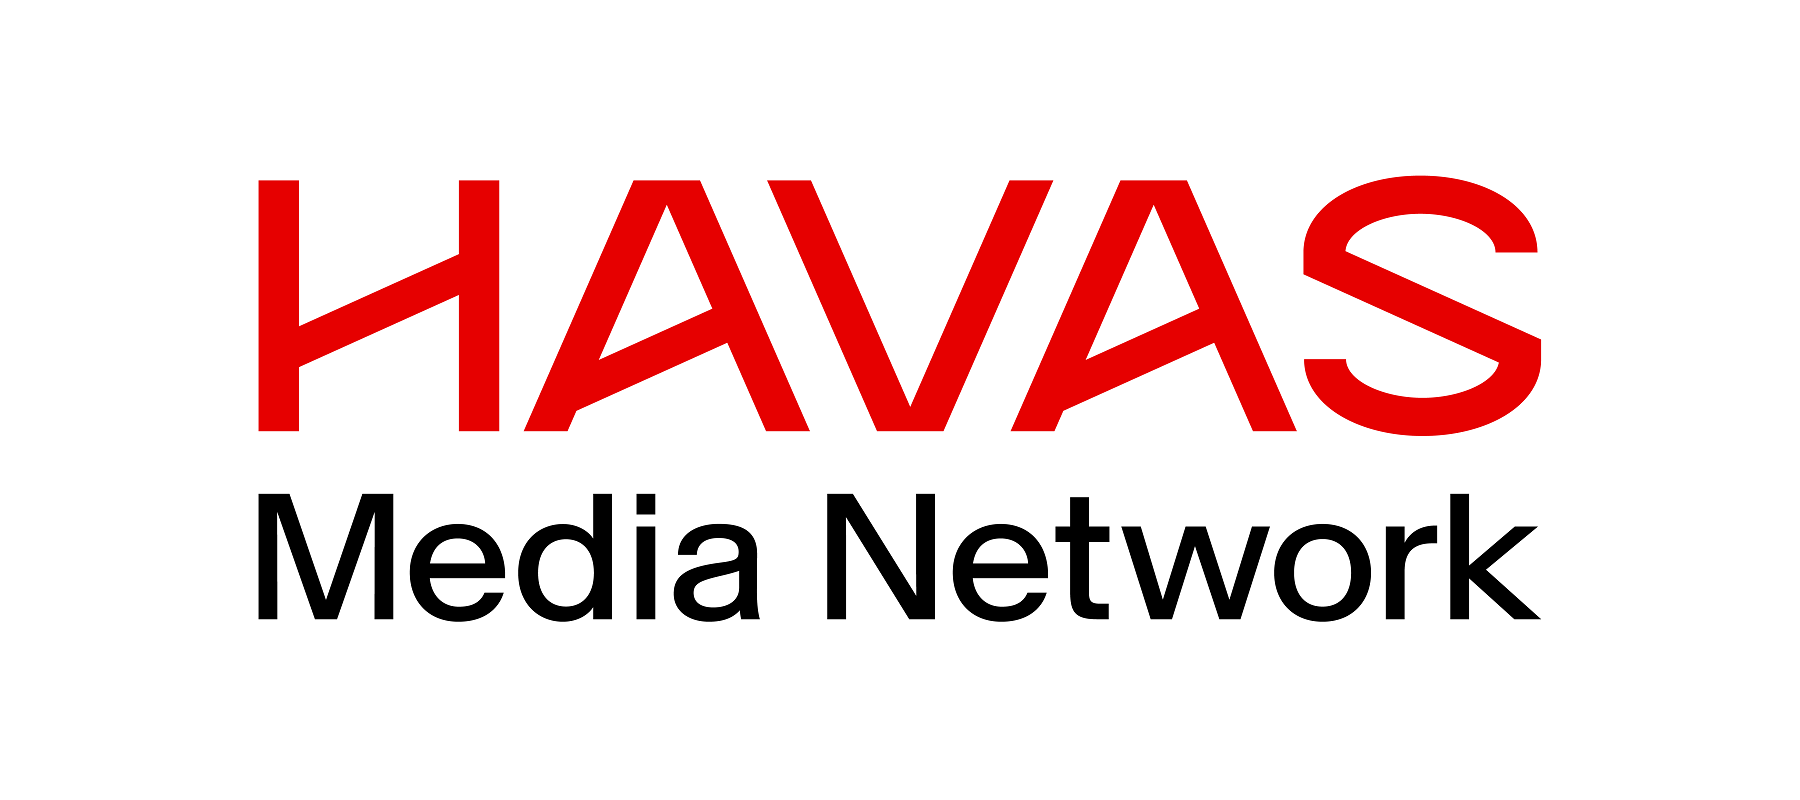 Havas Media announces new leadership roles to drive growth